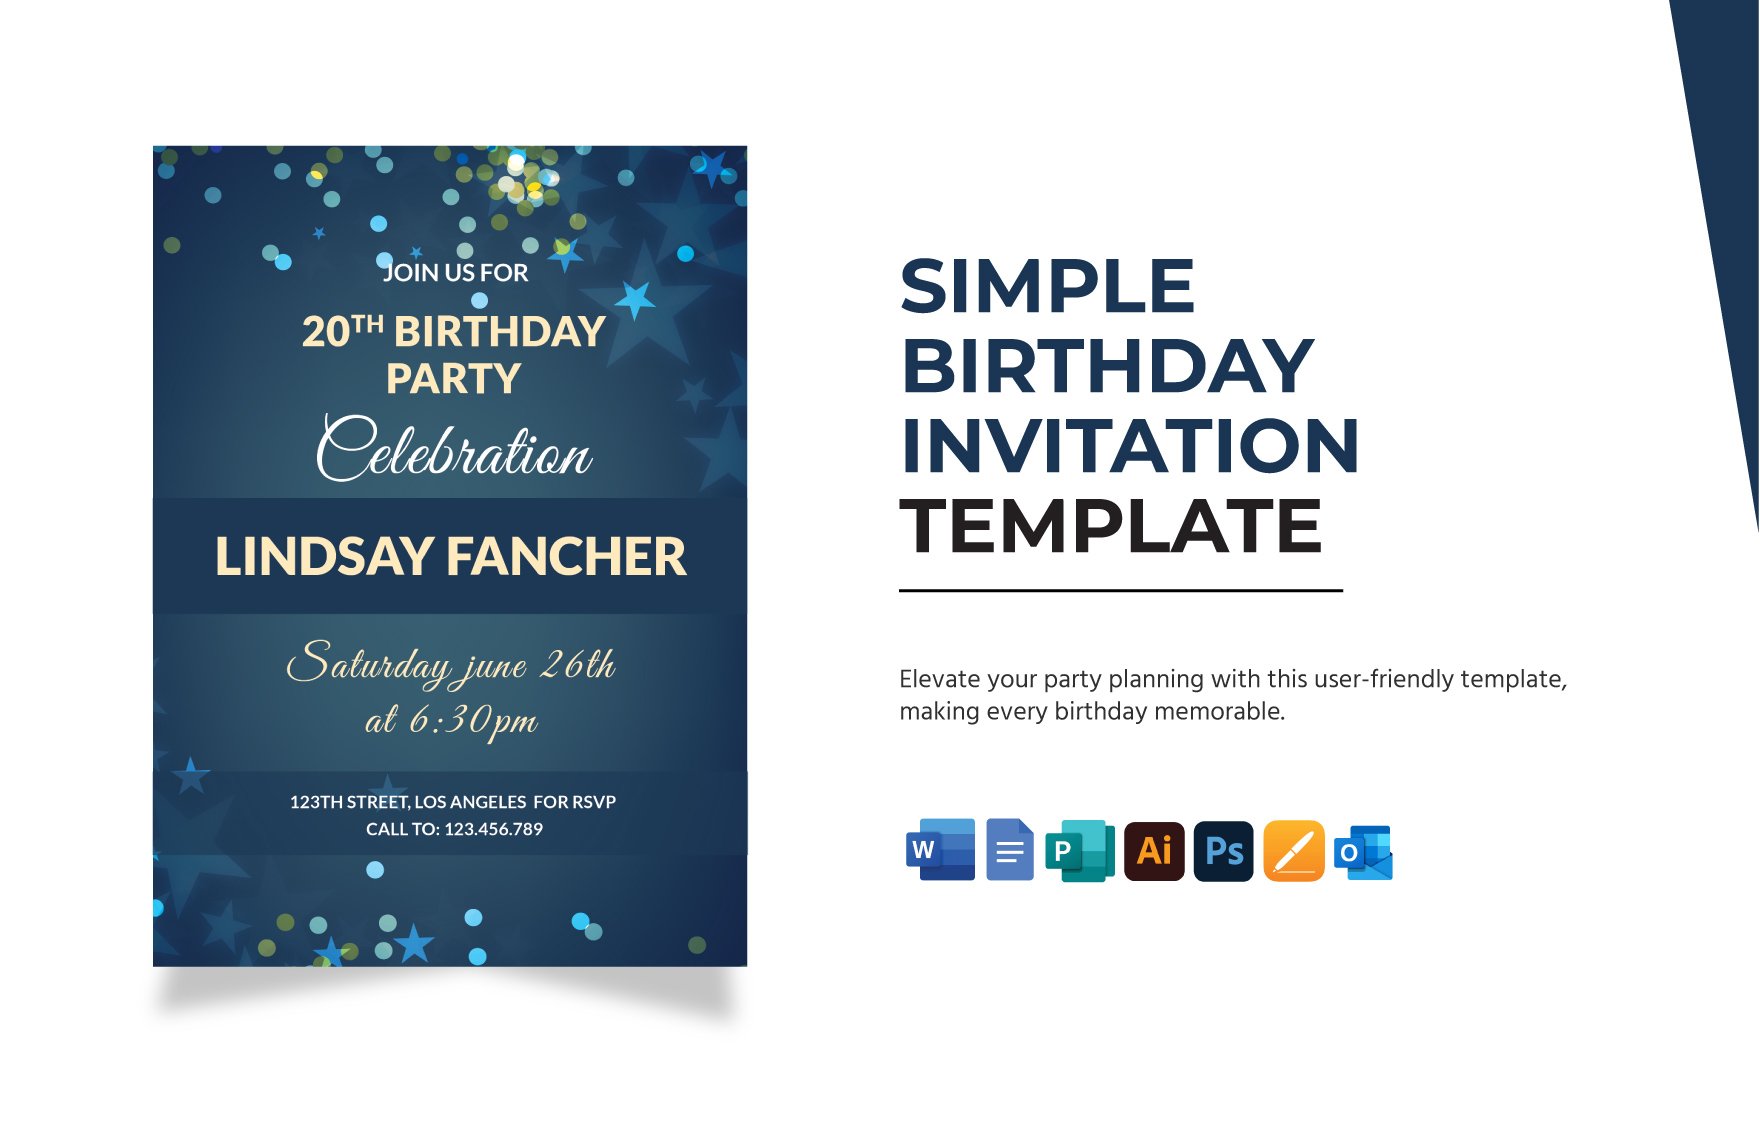 Simple Birthday Invitation Template